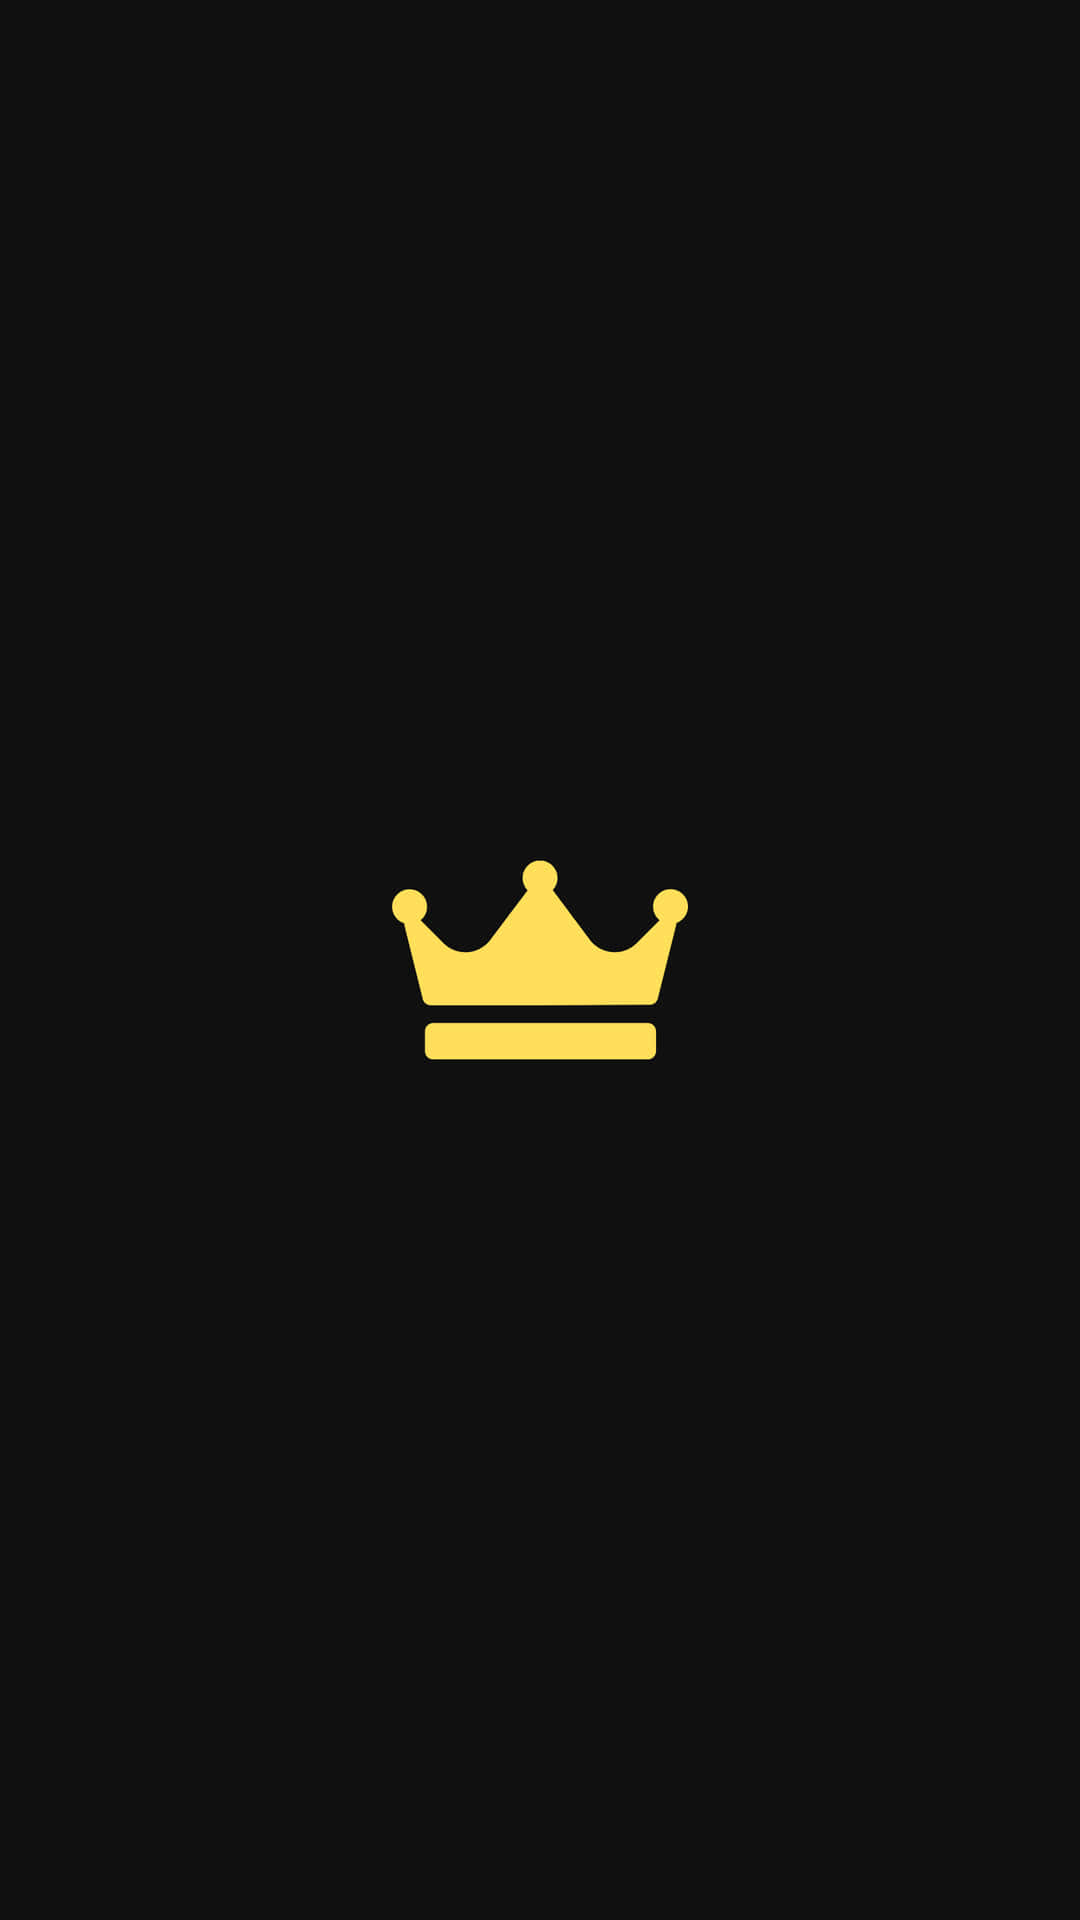 A Crown Logo On A Black Background